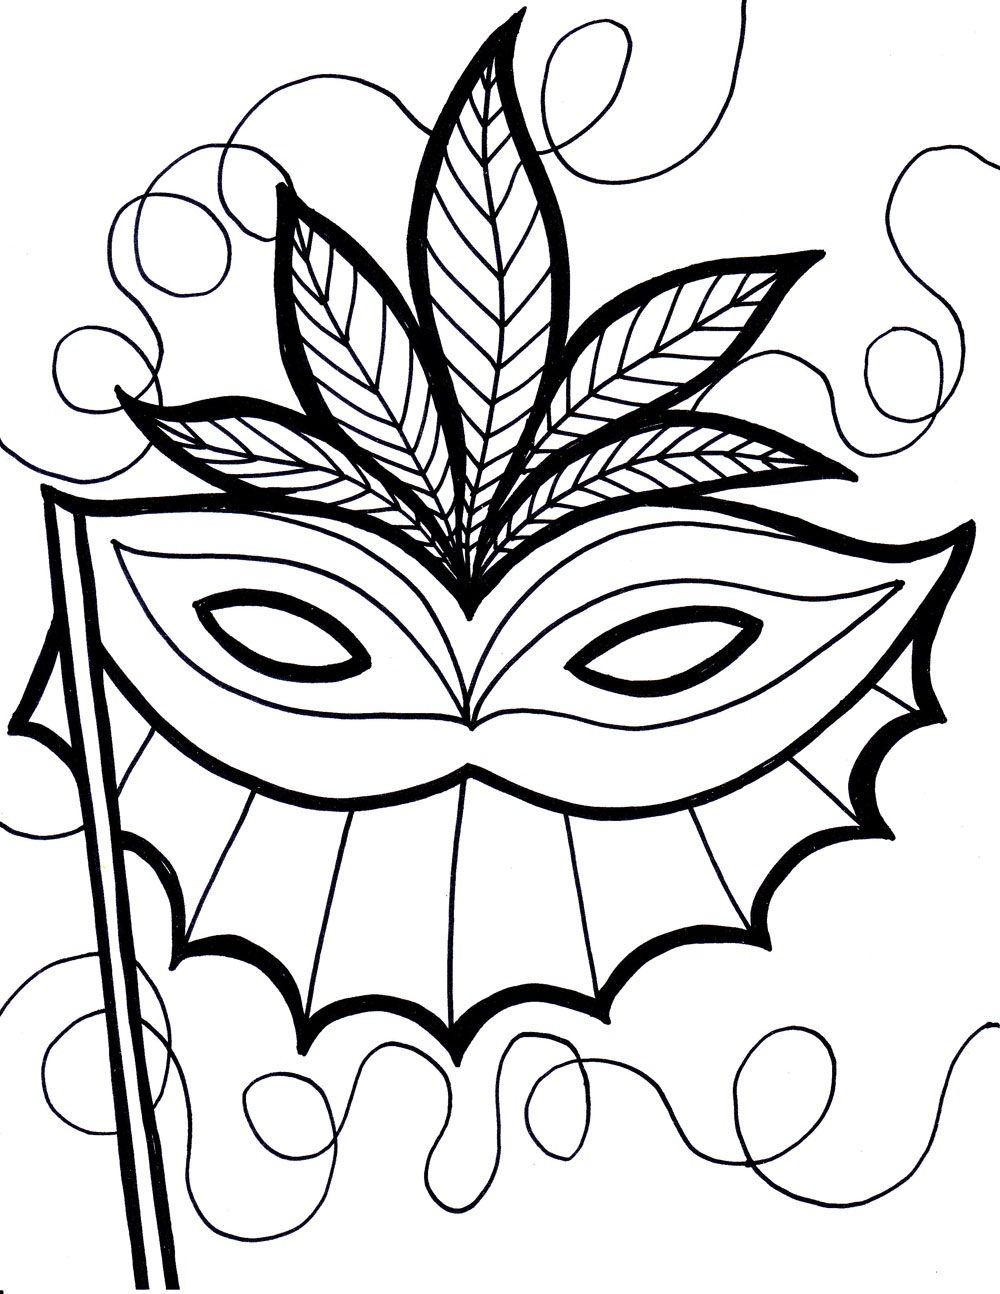 Карнавальная маска для раскраски (маска)